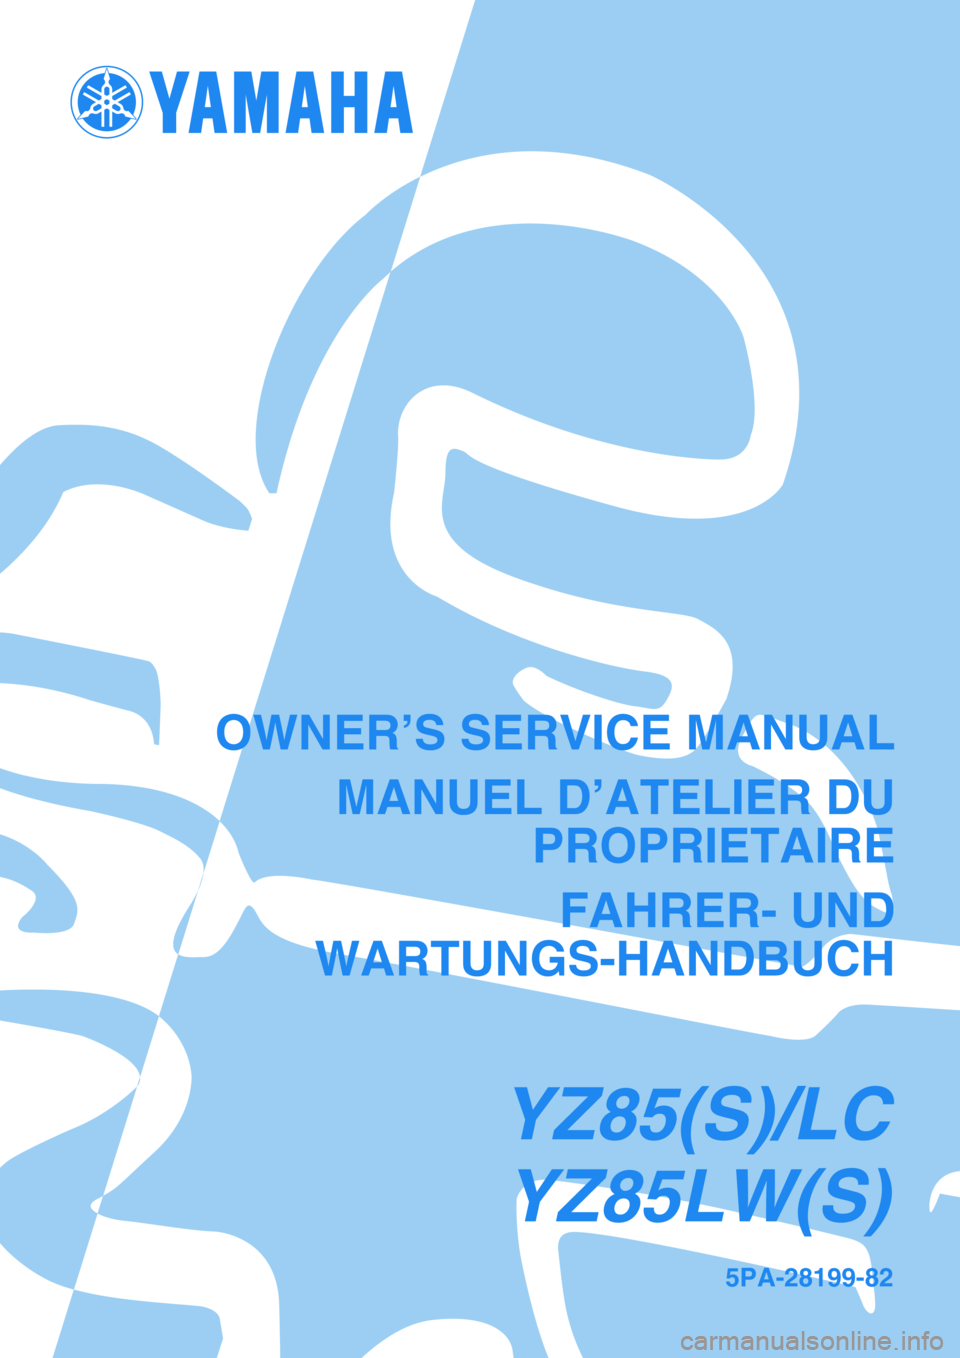 YAMAHA YZ85 2004  Betriebsanleitungen (in German) 5PA-28199-82
OWNER’S SERVICE MANUAL
MANUEL D’ATELIER DU
PROPRIETAIRE
FAHRER- UND
WARTUNGS-HANDBUCH
YZ85(S)/LC
YZ85LW(S) 